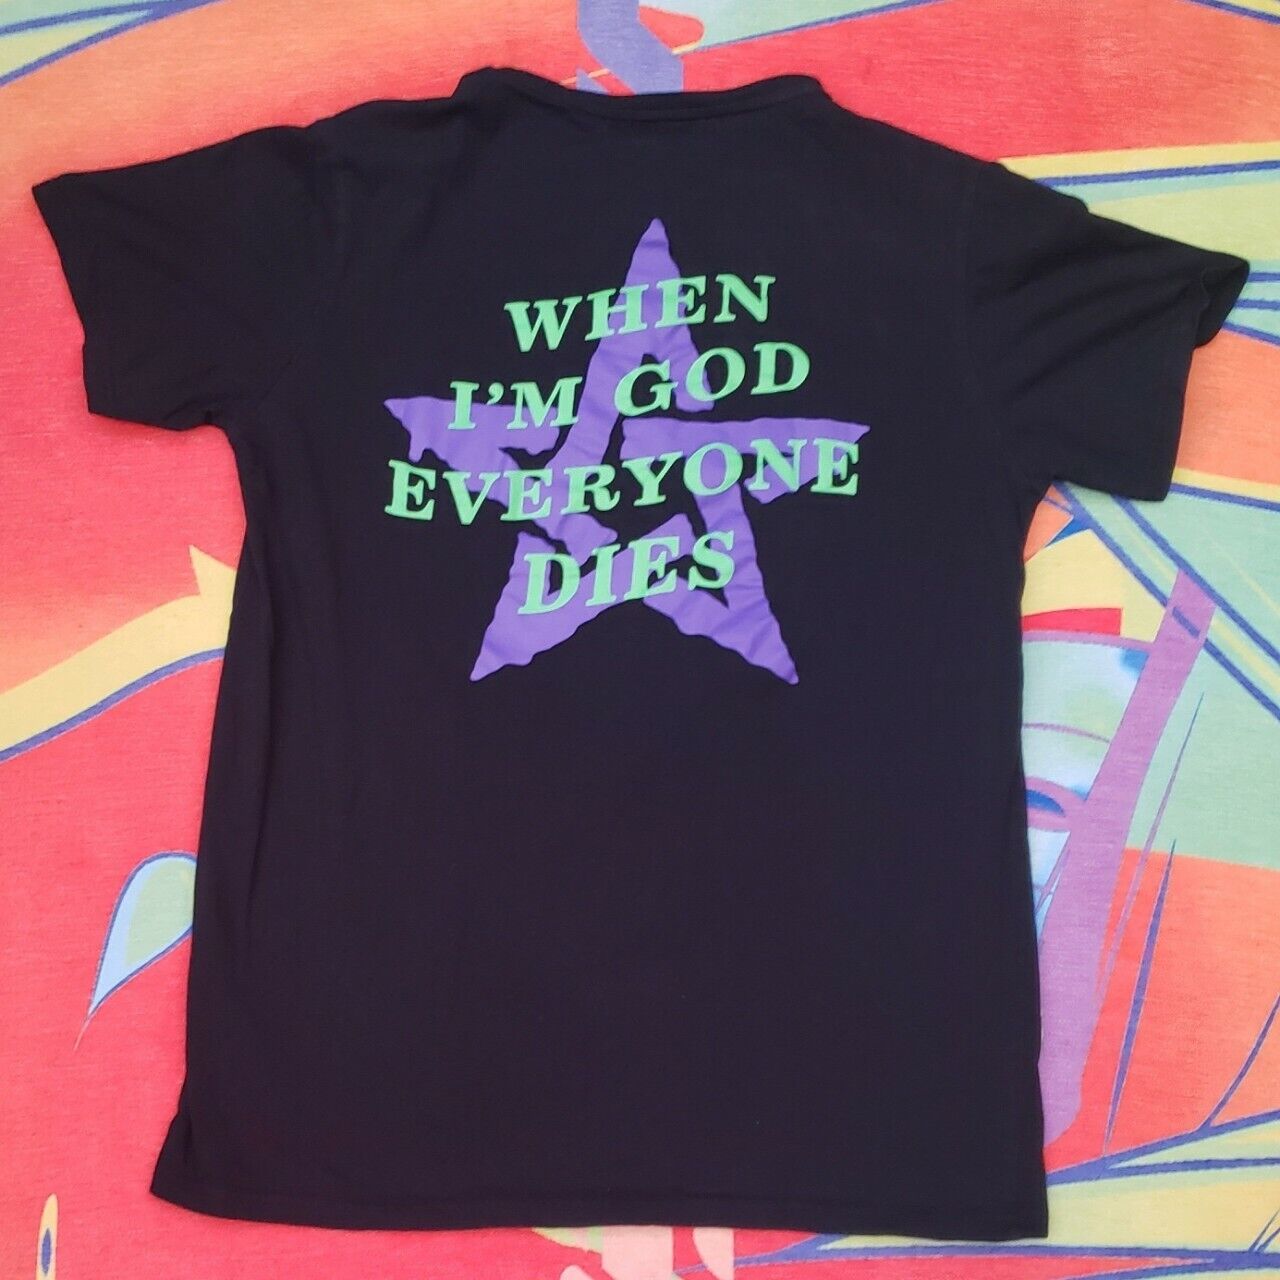 Rare Marilyn Manson x Killstar Shirt Sold Out - image 2